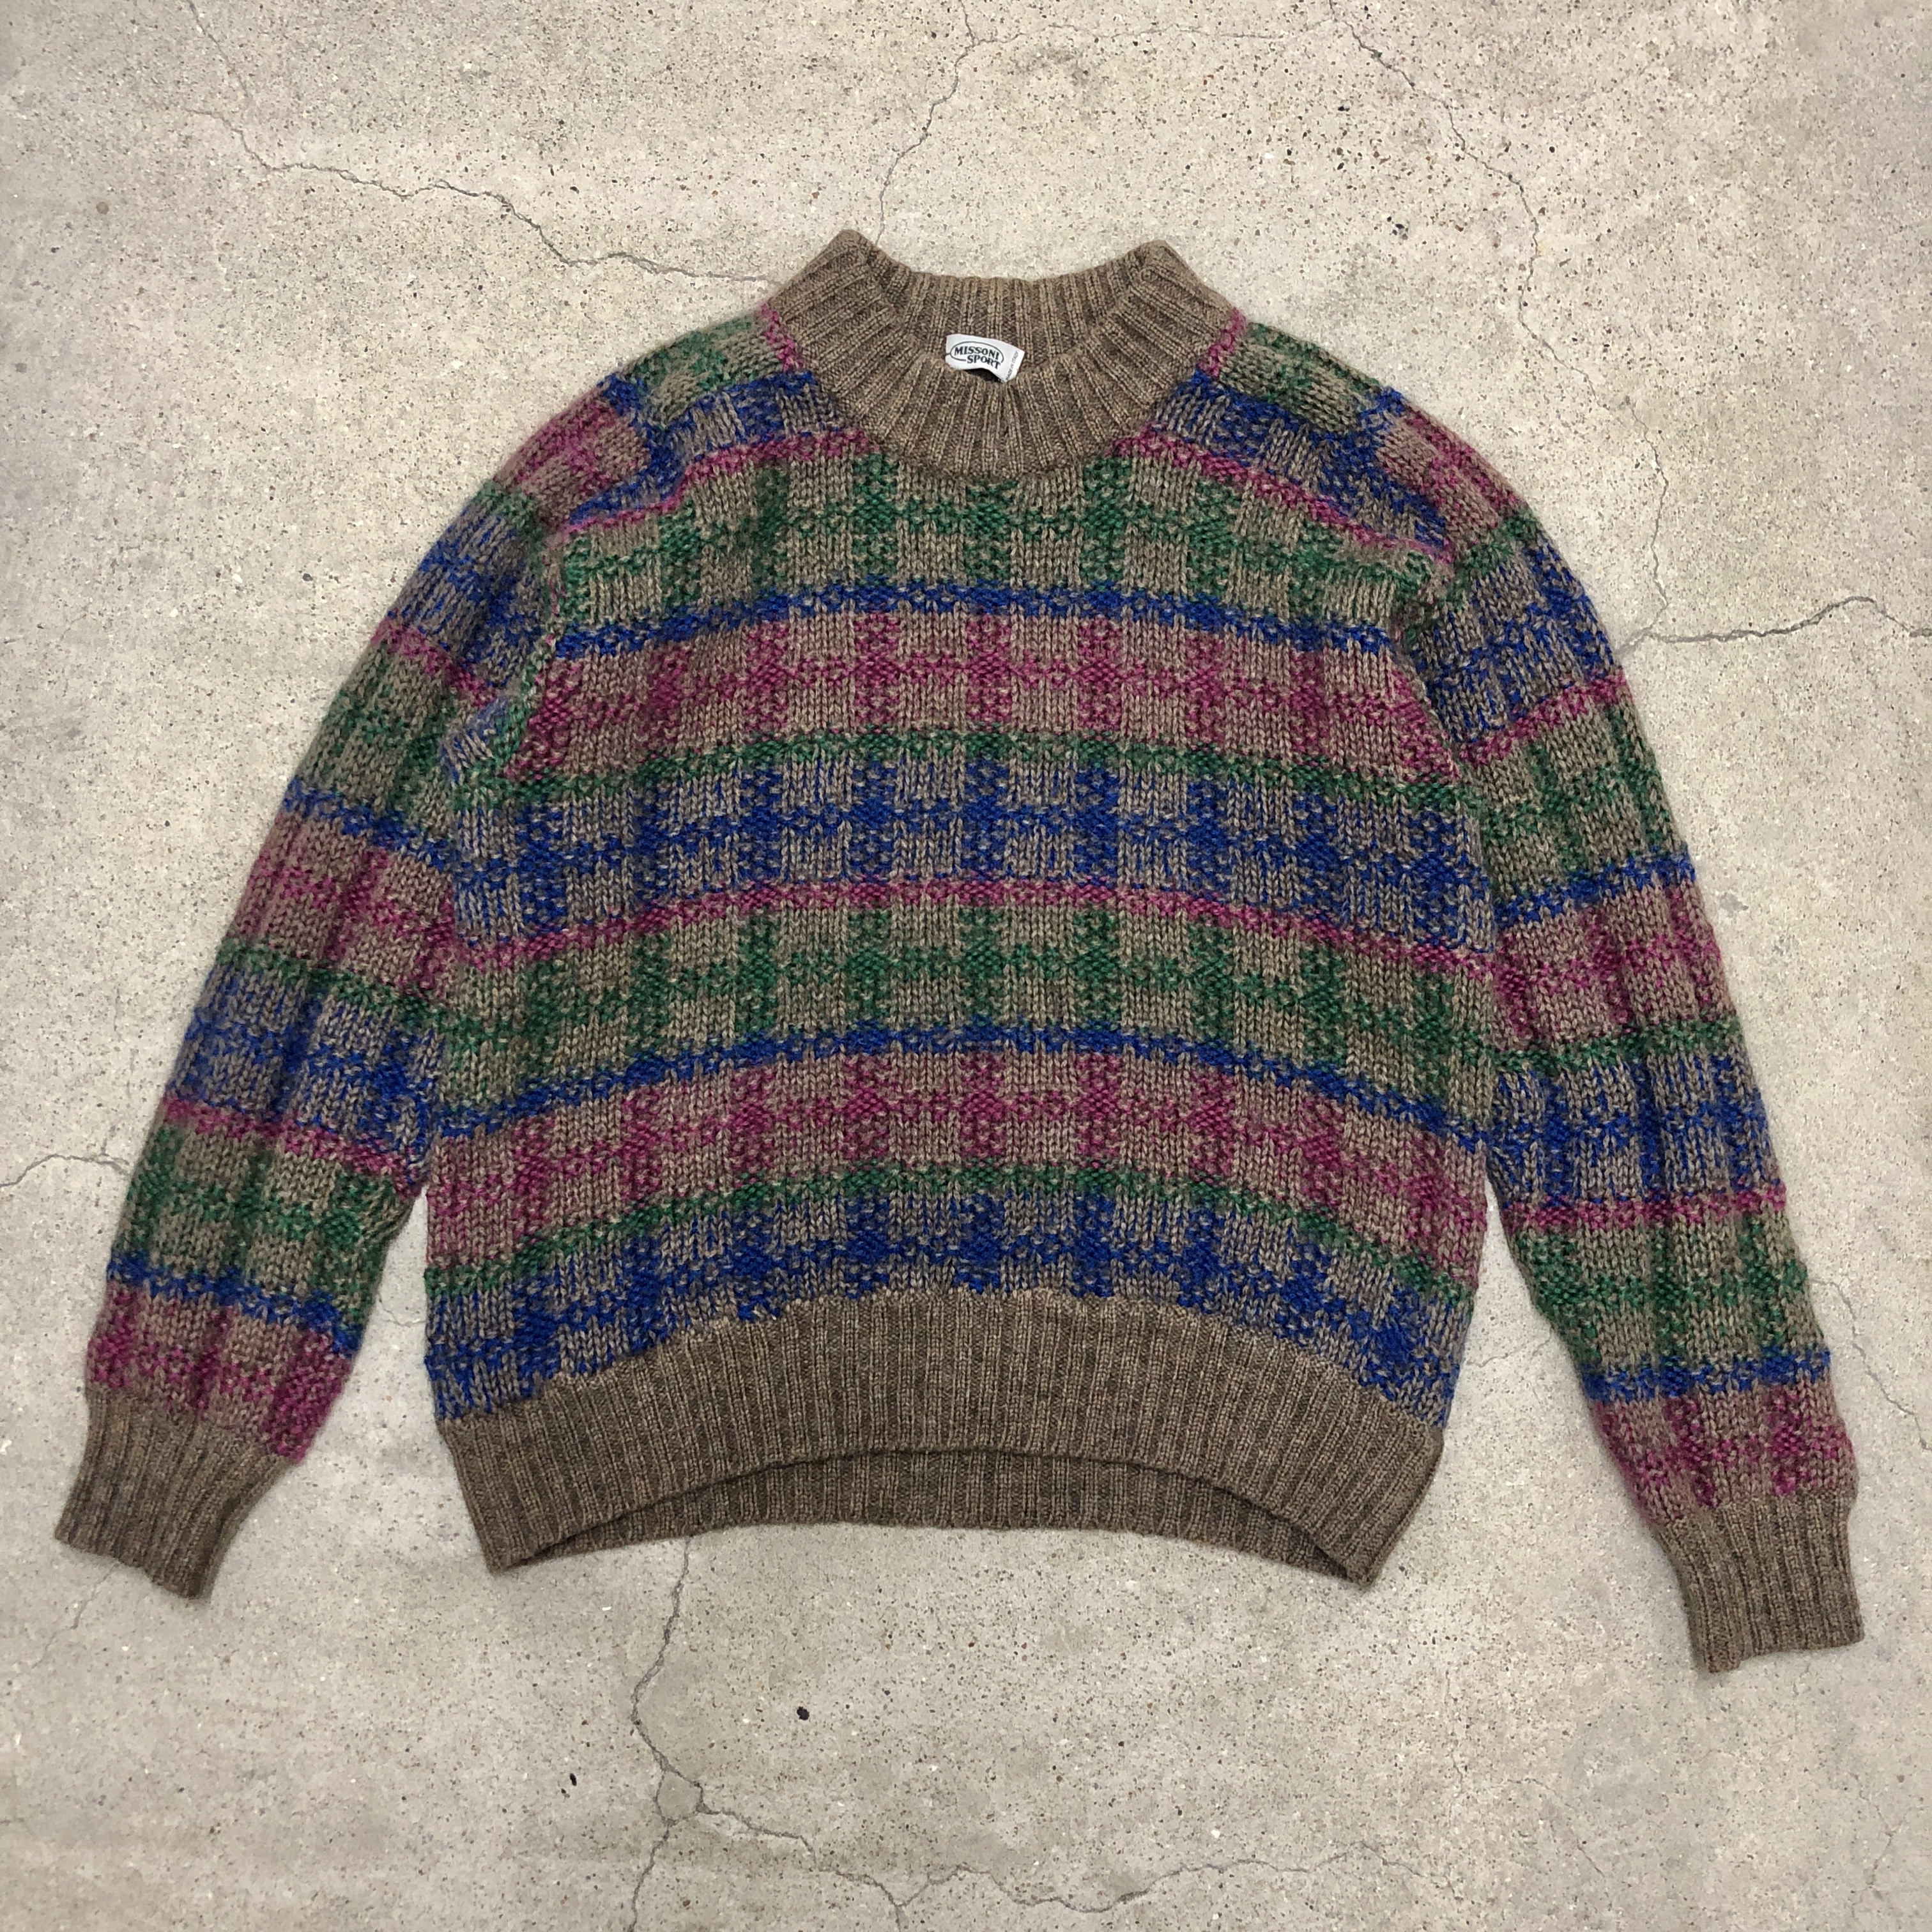 MISSONI SPORT/Check Knit Sweater/Italy製/M/チェック柄ニット